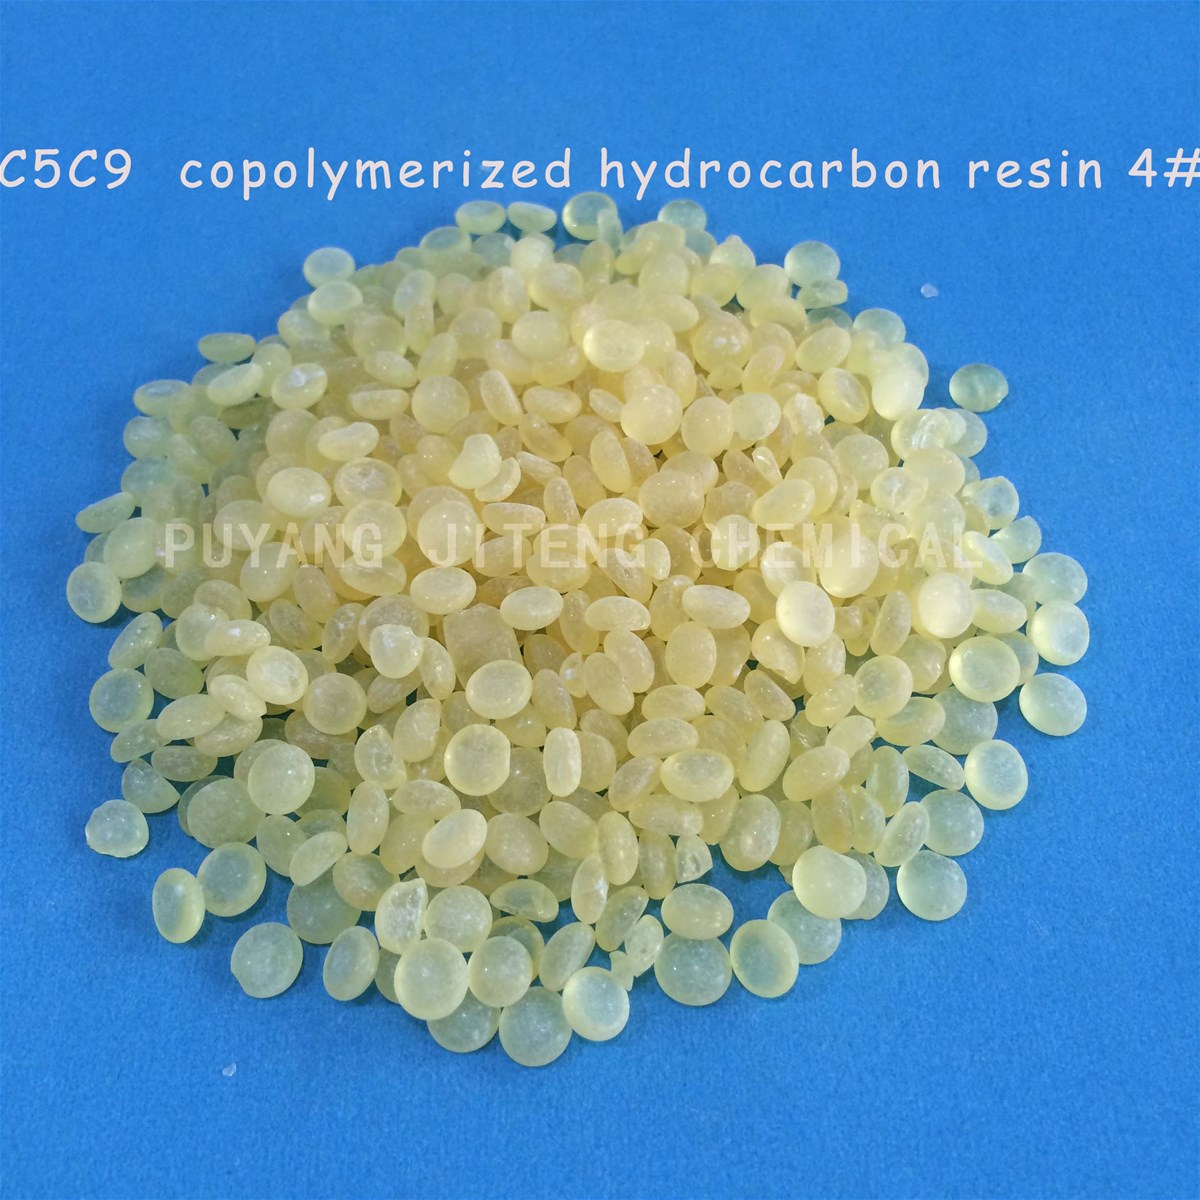 C5C9 copolymerized hydrocarbon resin